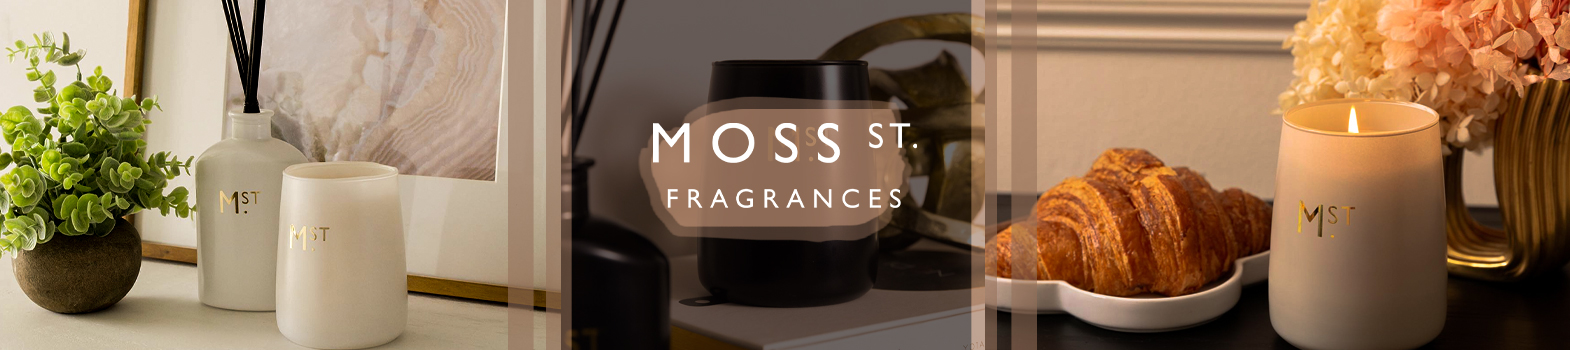 Moss St Frangrances